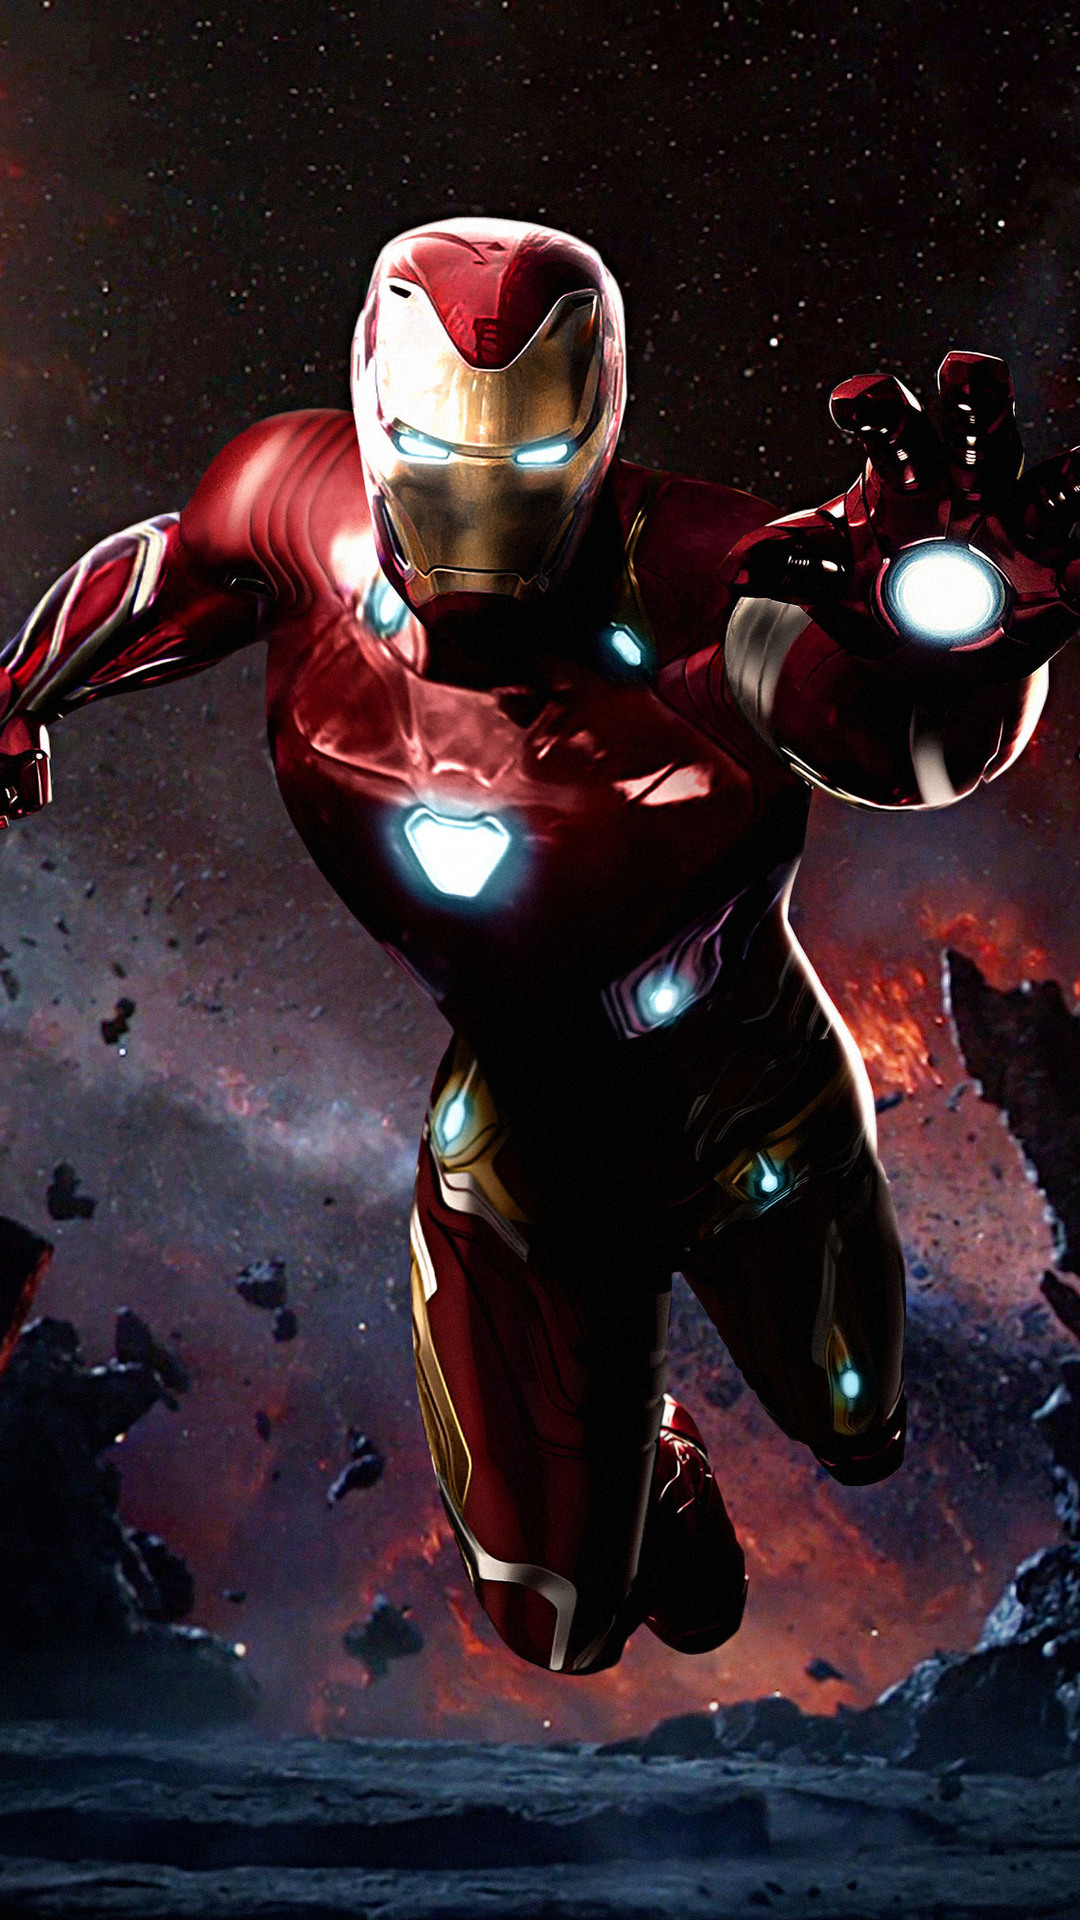 1080x1920 Iron Man Suit In Avengers Infinity War Iphone 76s